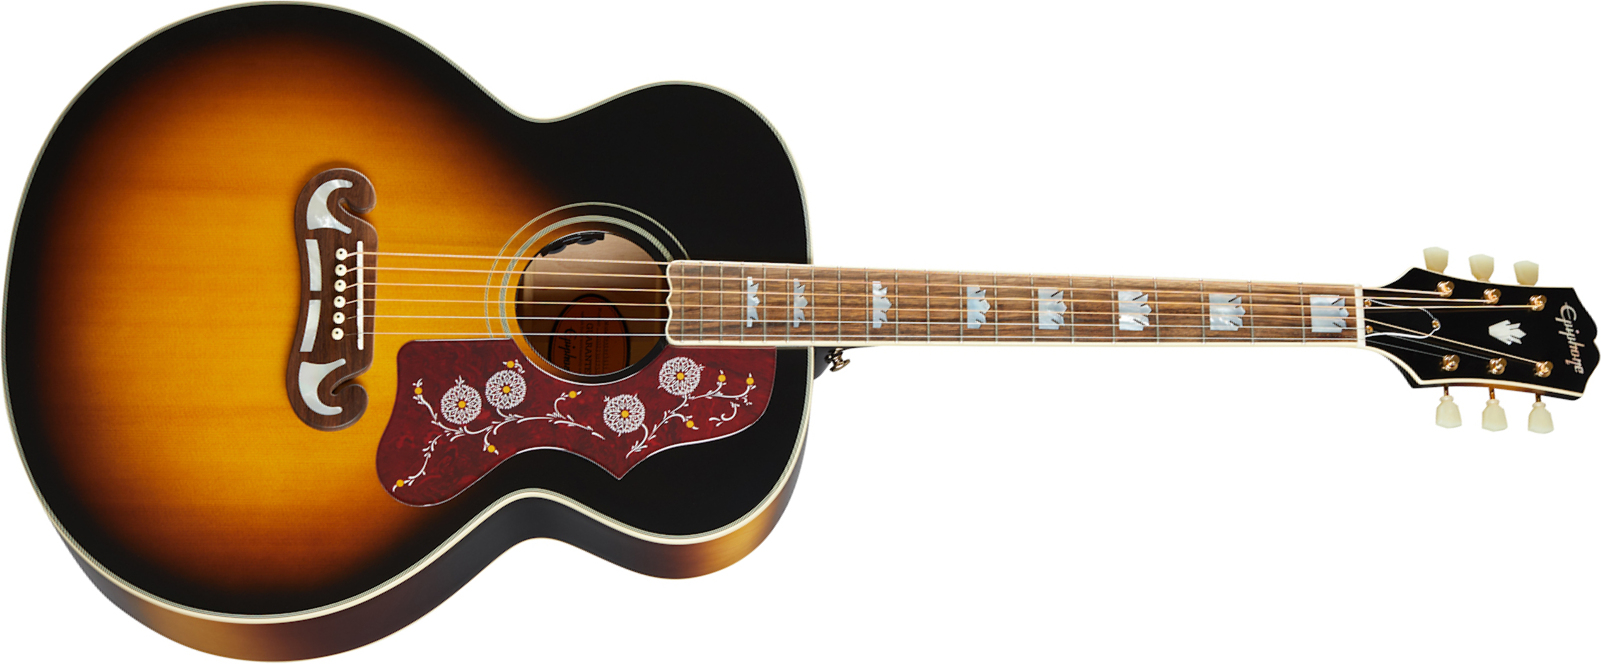 Epiphone J-200 Inspired By Gibson Jumbo Epicea Erable Lau - Aged Vintage Sunburst - Elektroakustische Gitarre - Main picture